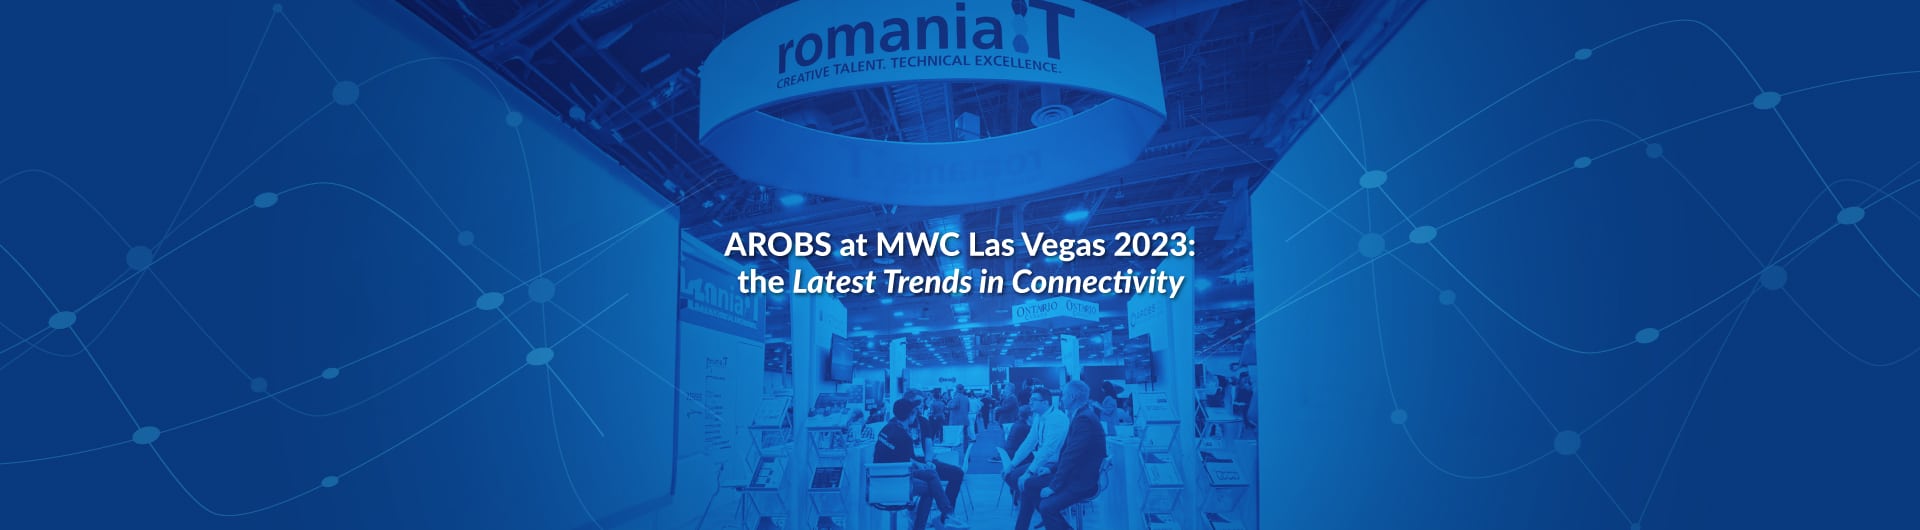 AROBS at MWC Las Vegas 2023